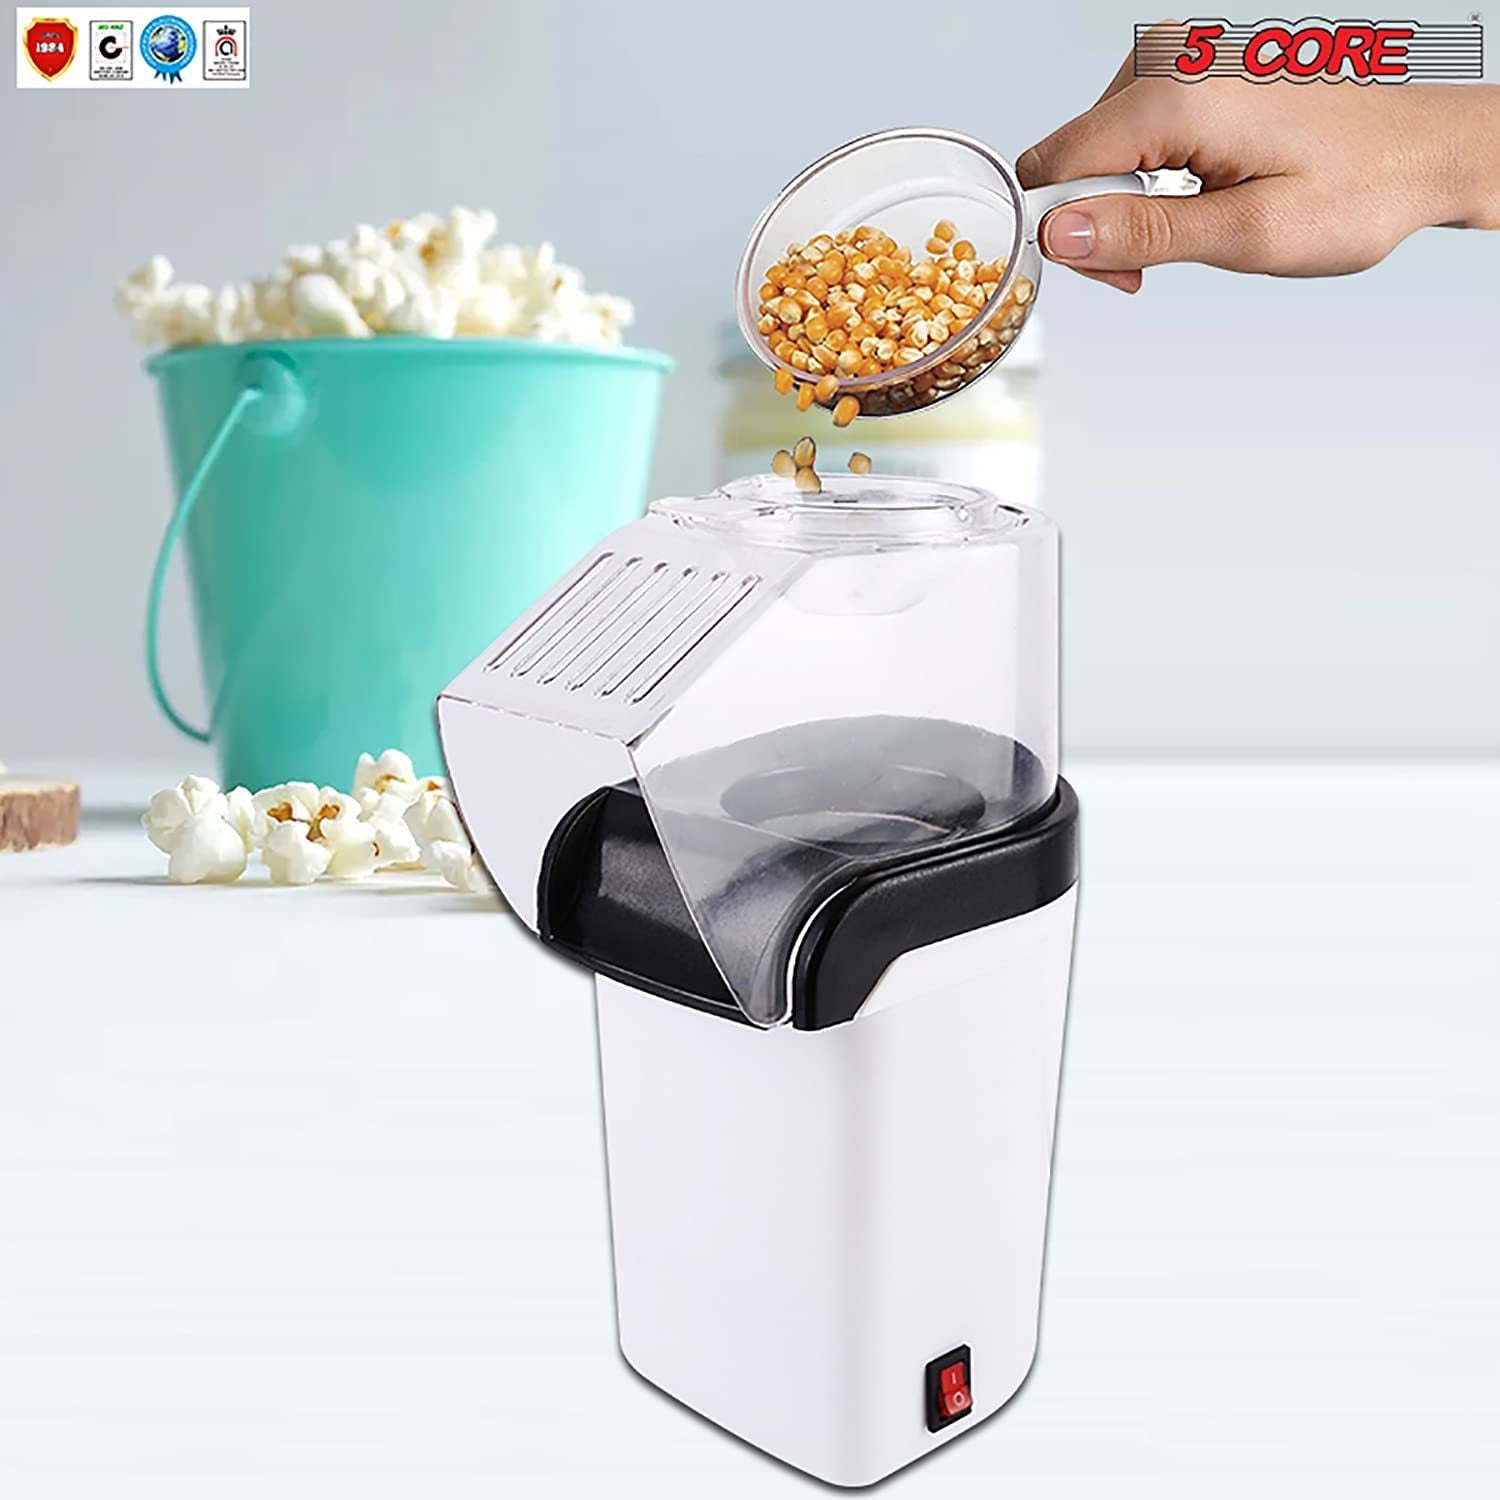 5Core Popcorn Machine Hot Air Electric Popper Kernel No Oil POP on